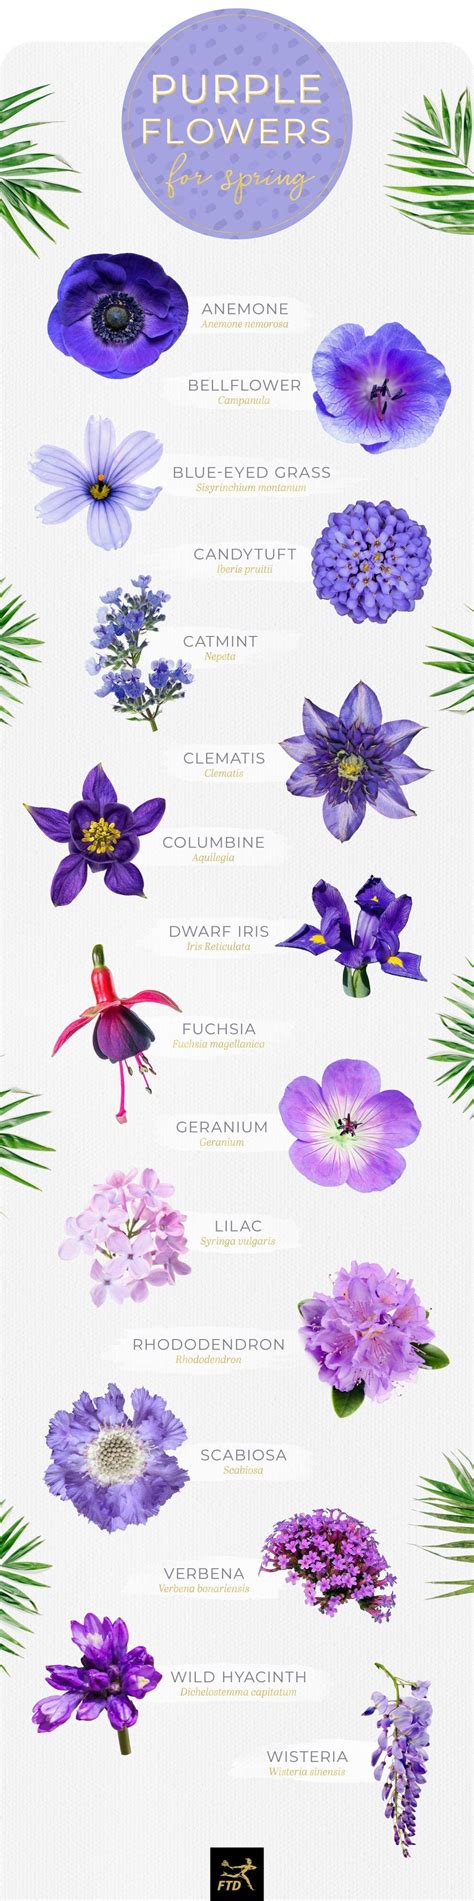 50 Types Of Purple Flowers Types Of Purple Flowers Small